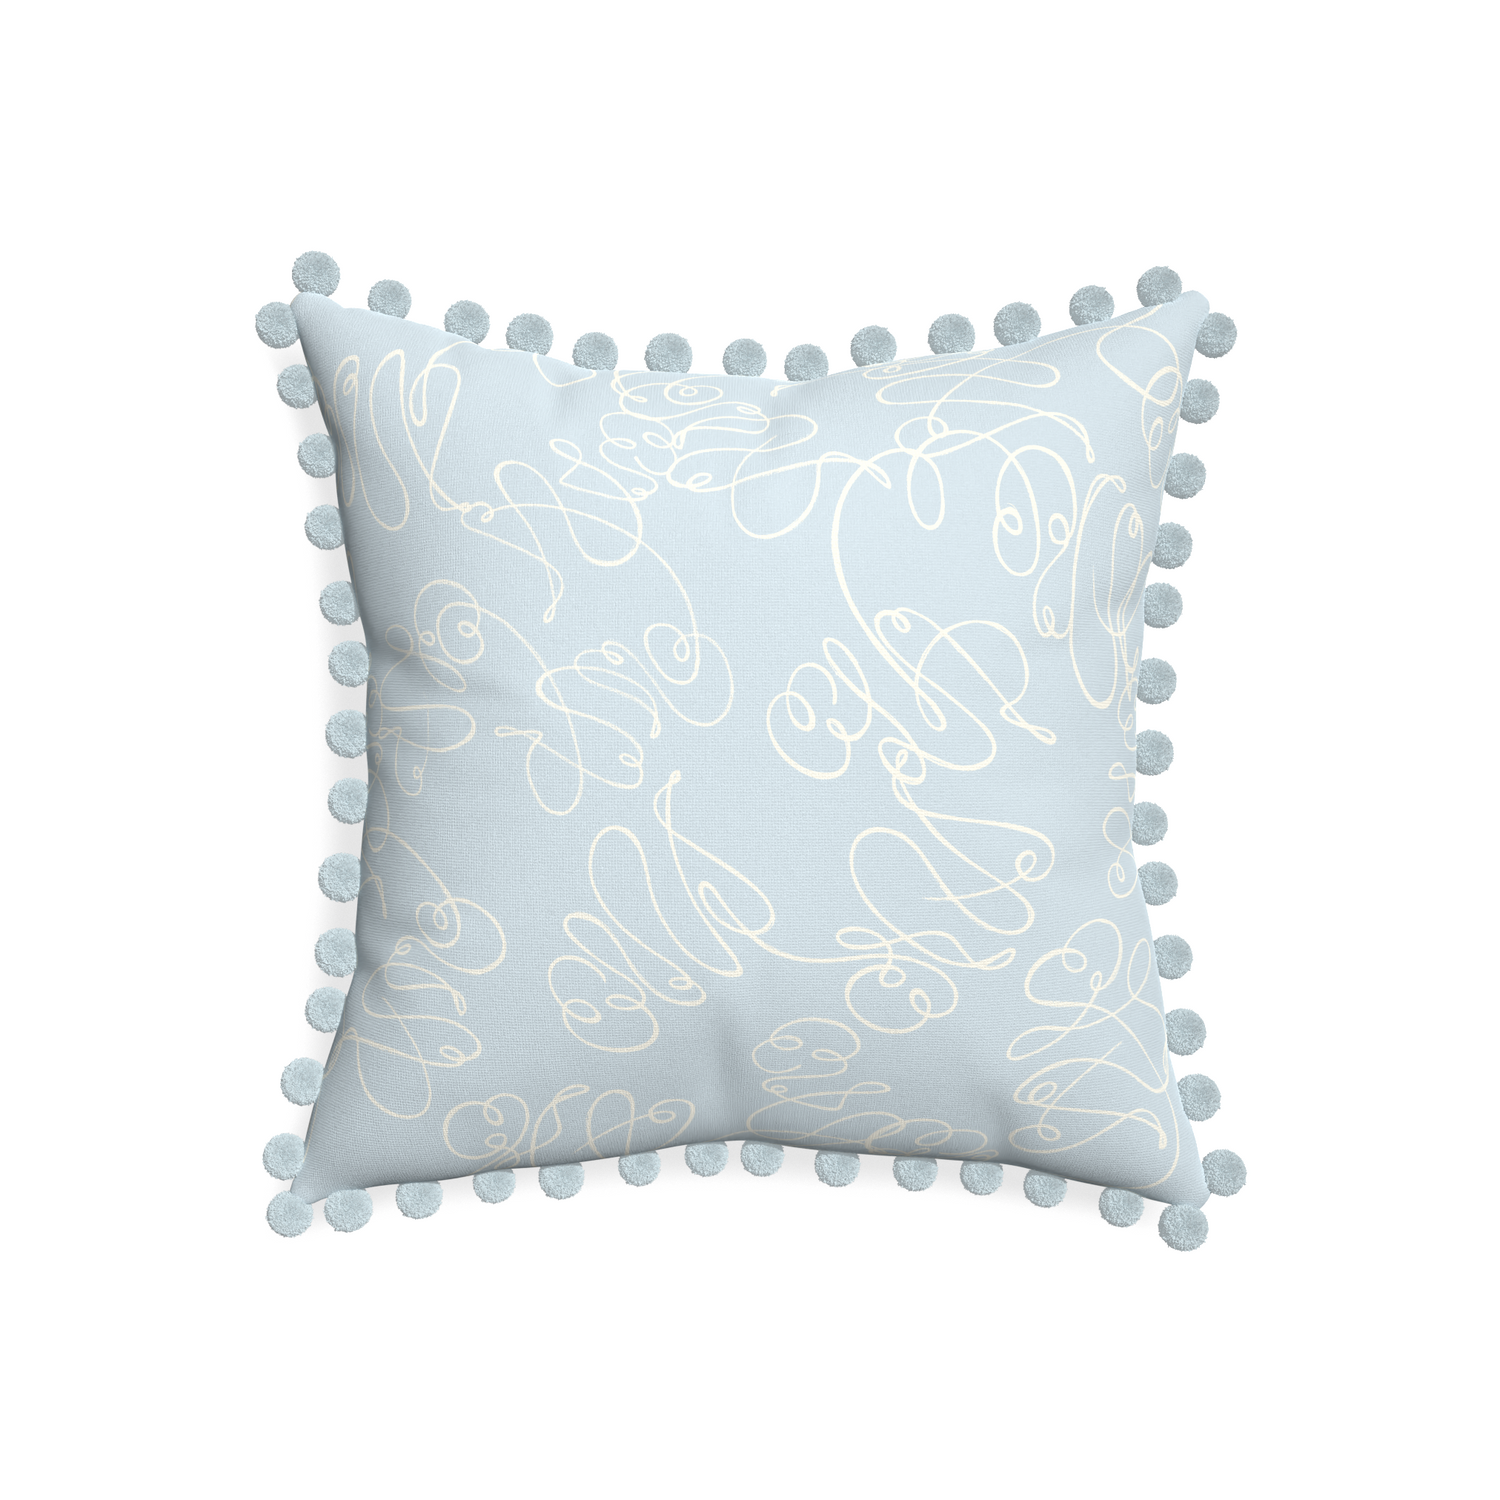 20-square mirabella custom pillow with powder pom pom on white background